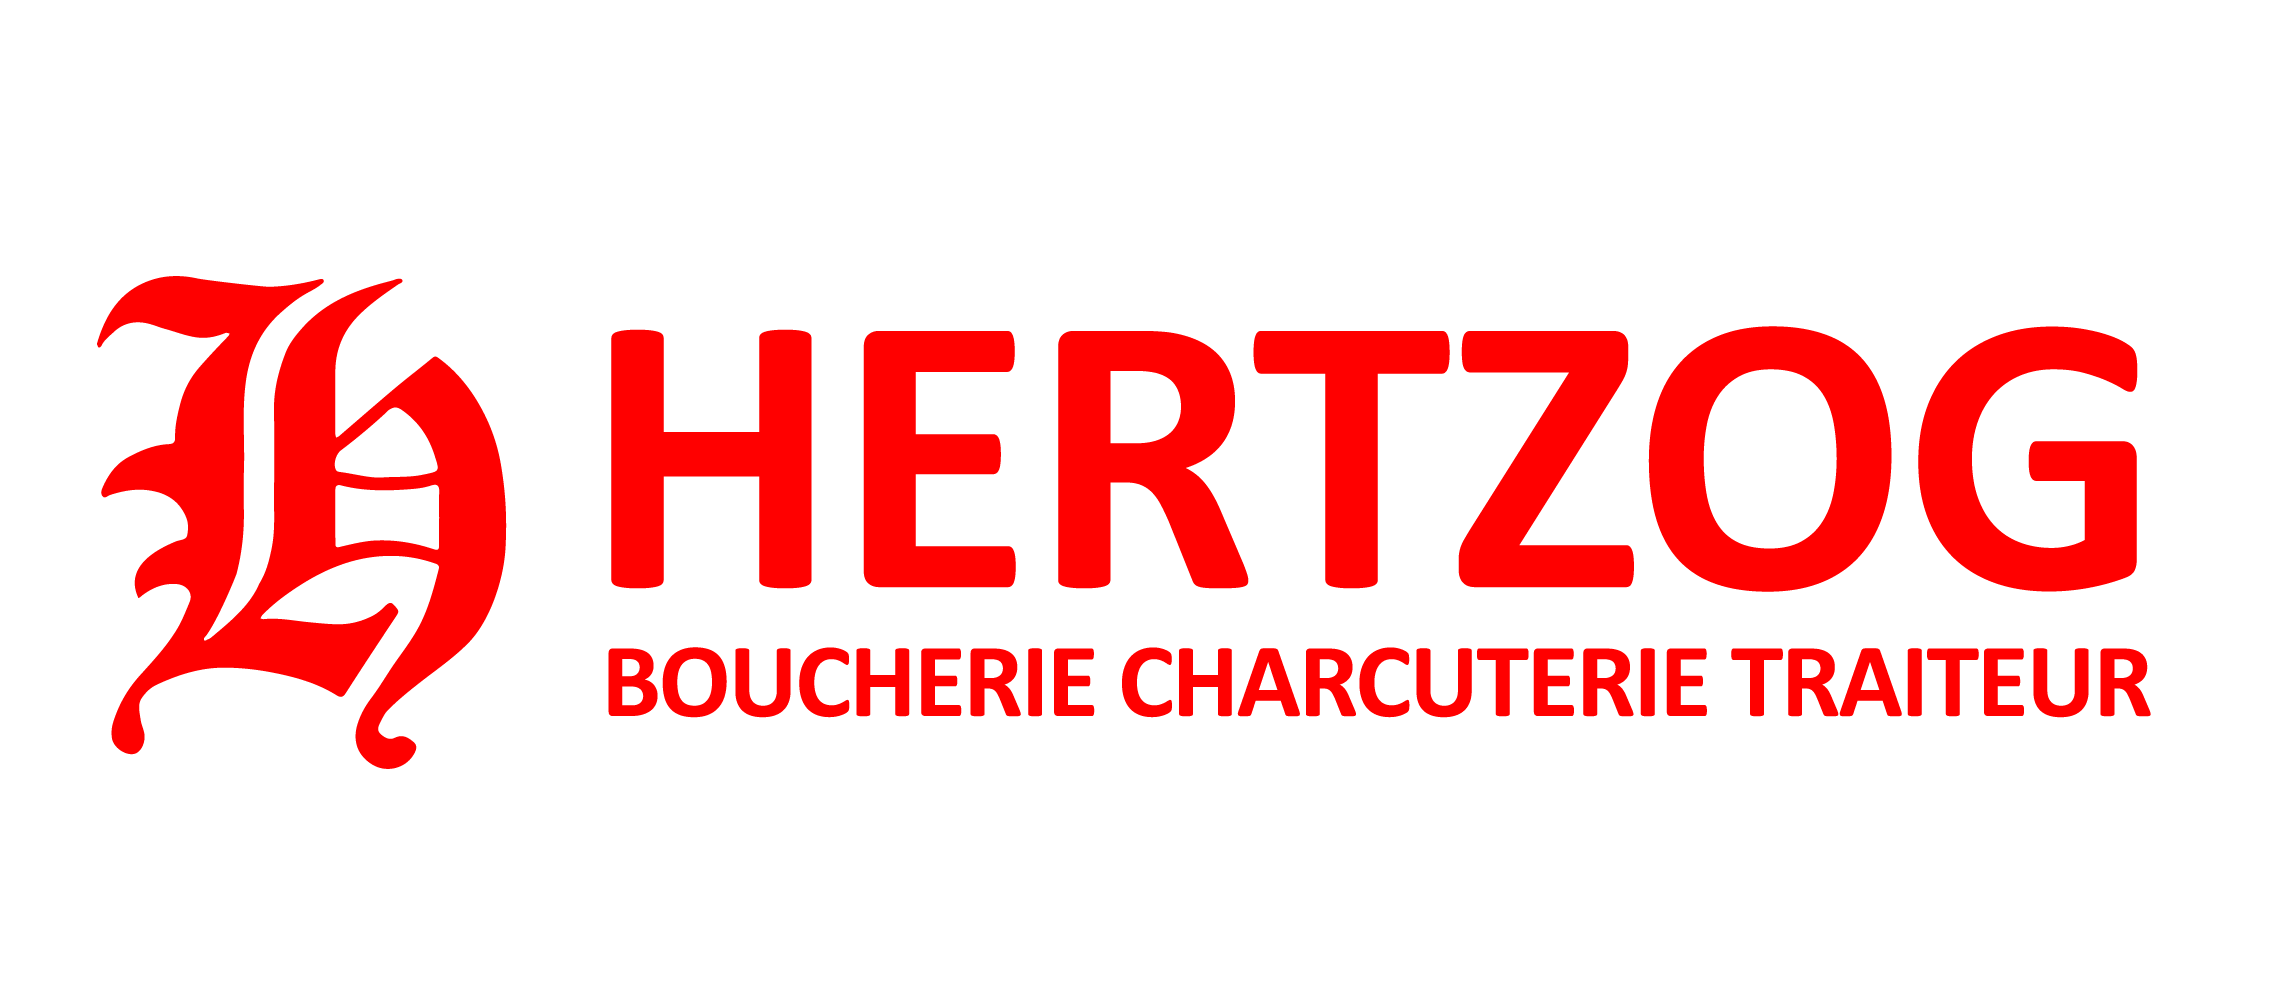 BOUCHERIE CHARCUTERIE HERTZOG - GROUPE